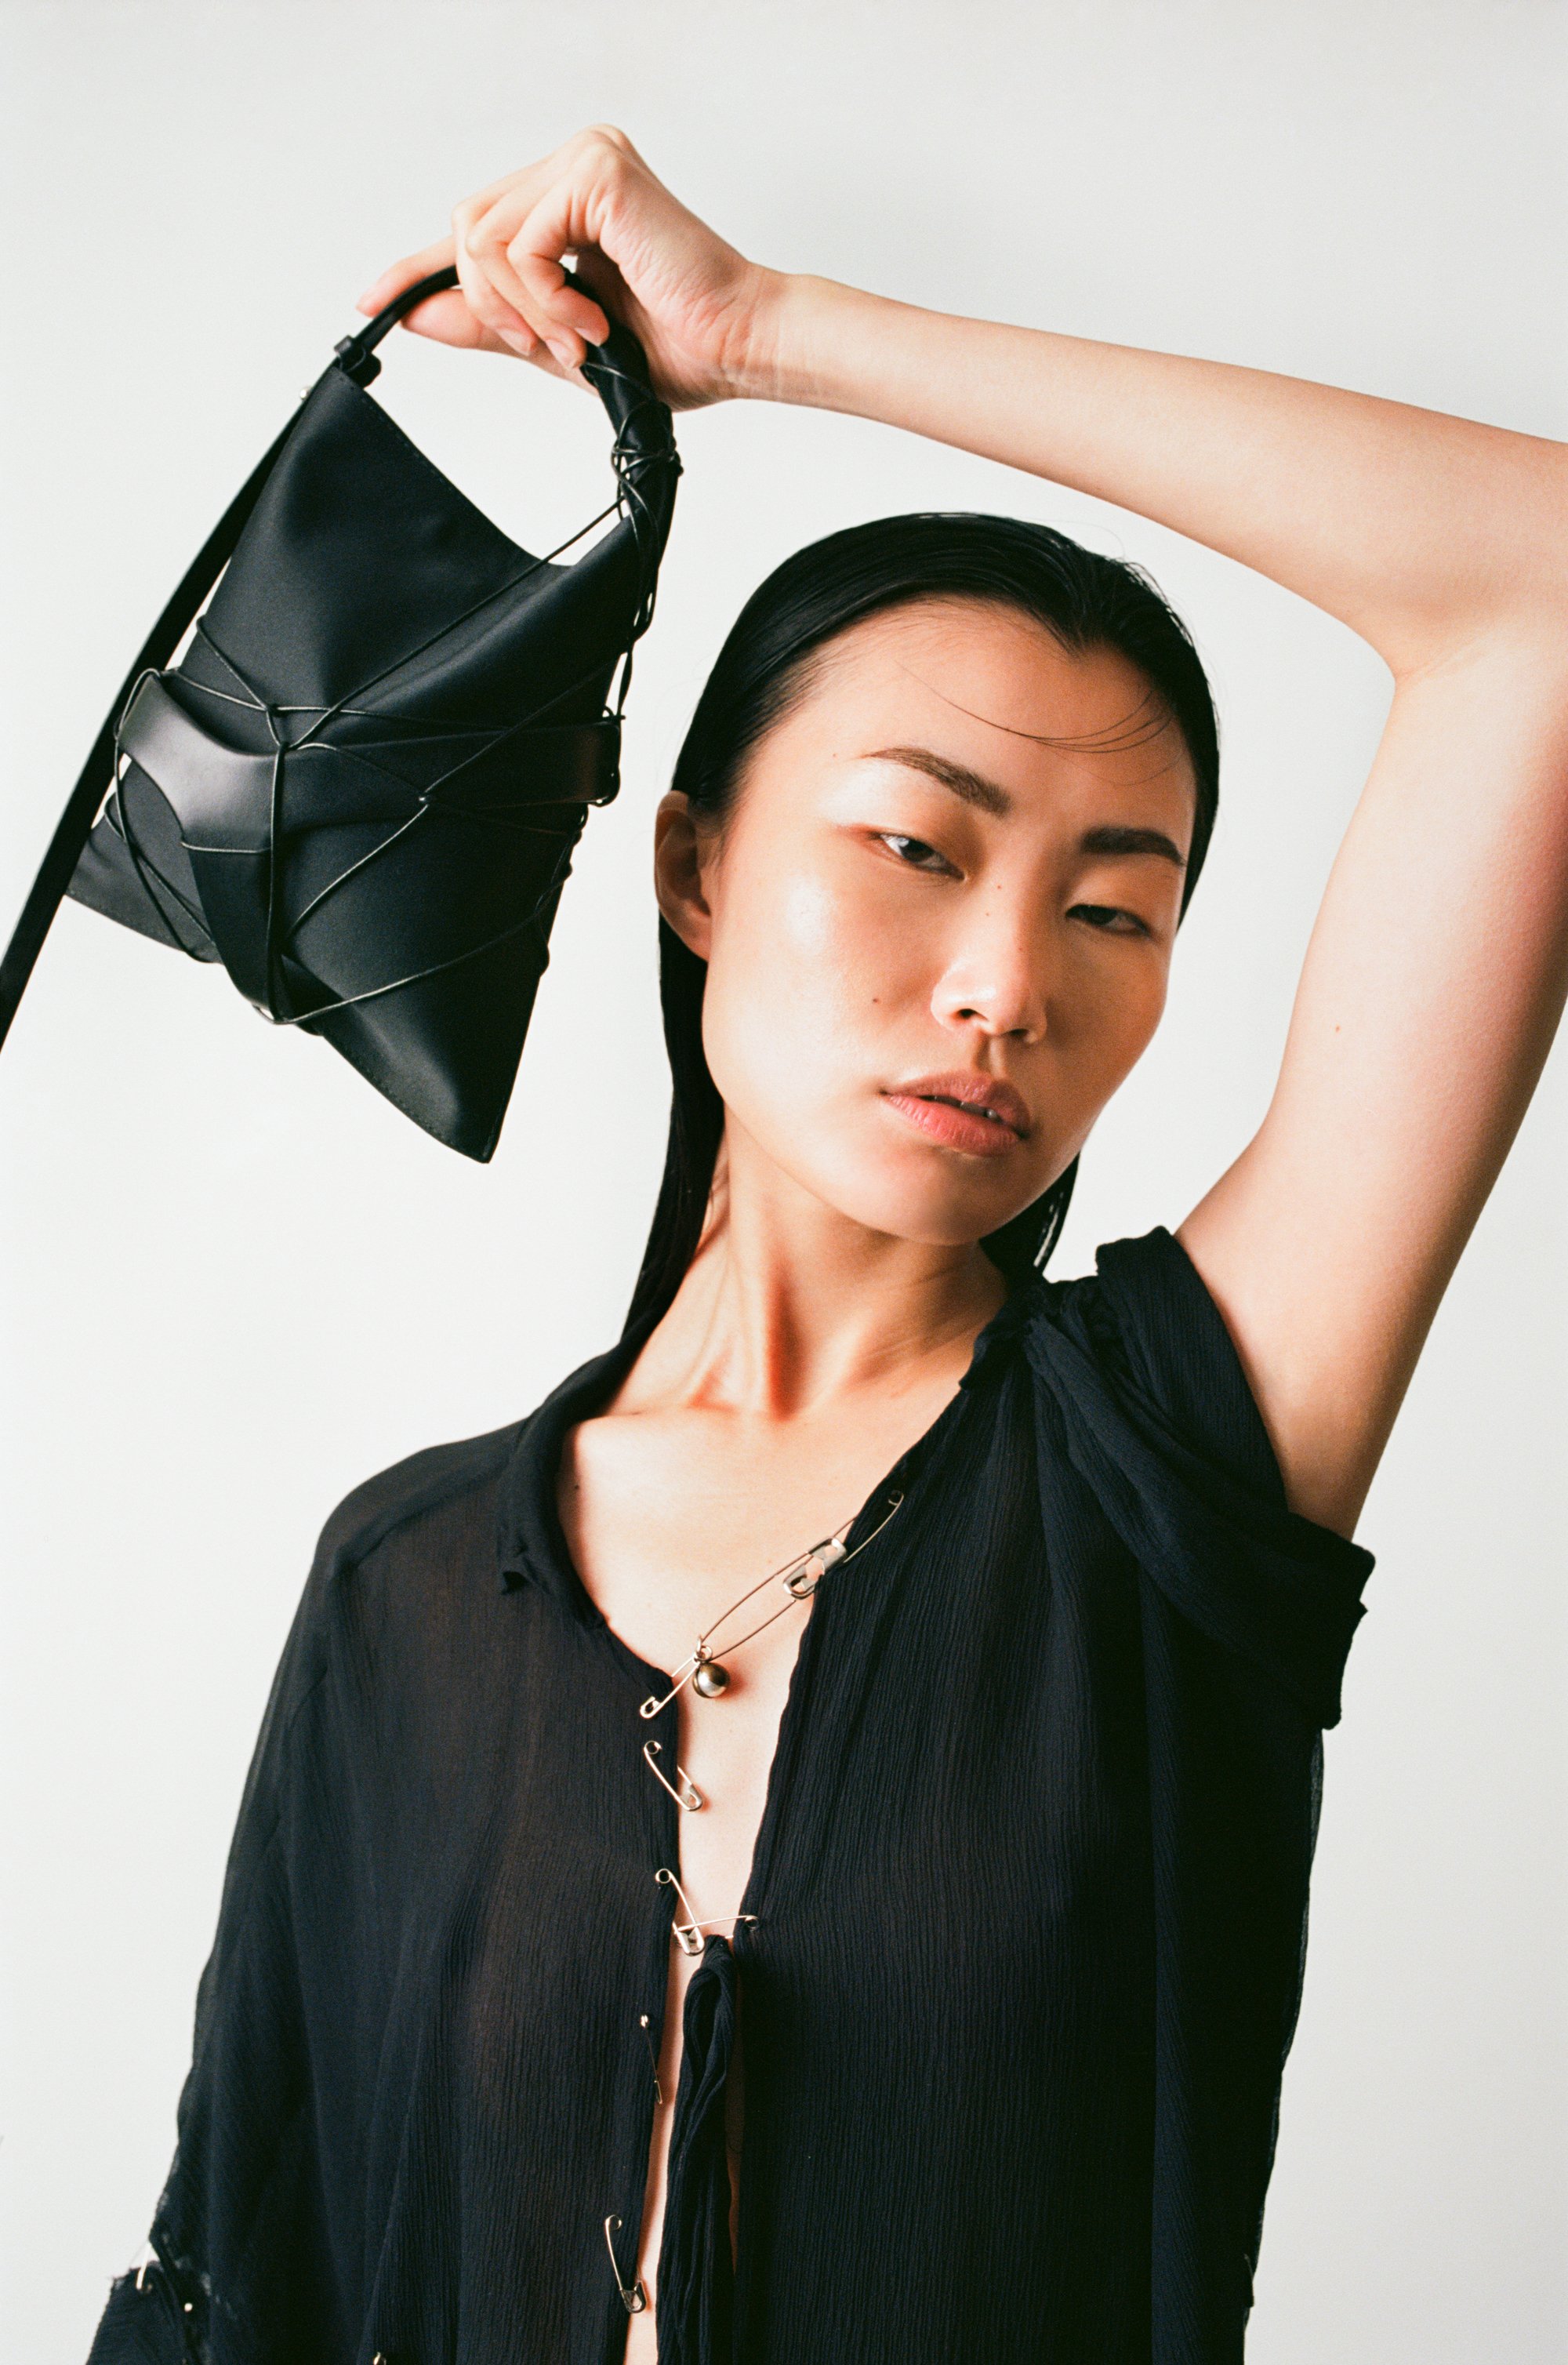 Kikiito-houseofito-sanagi-mini-black-leather-silk-handbag-bag-made-in-England-Uk-styling-craftsmanship-handmade-avantgarde-Japanese-London-accessories-minimalist-design-sustainable-slow-fashion-brand-one-of-a-kind-editorial-photoshoot-model-Po-Hsuan.jpg